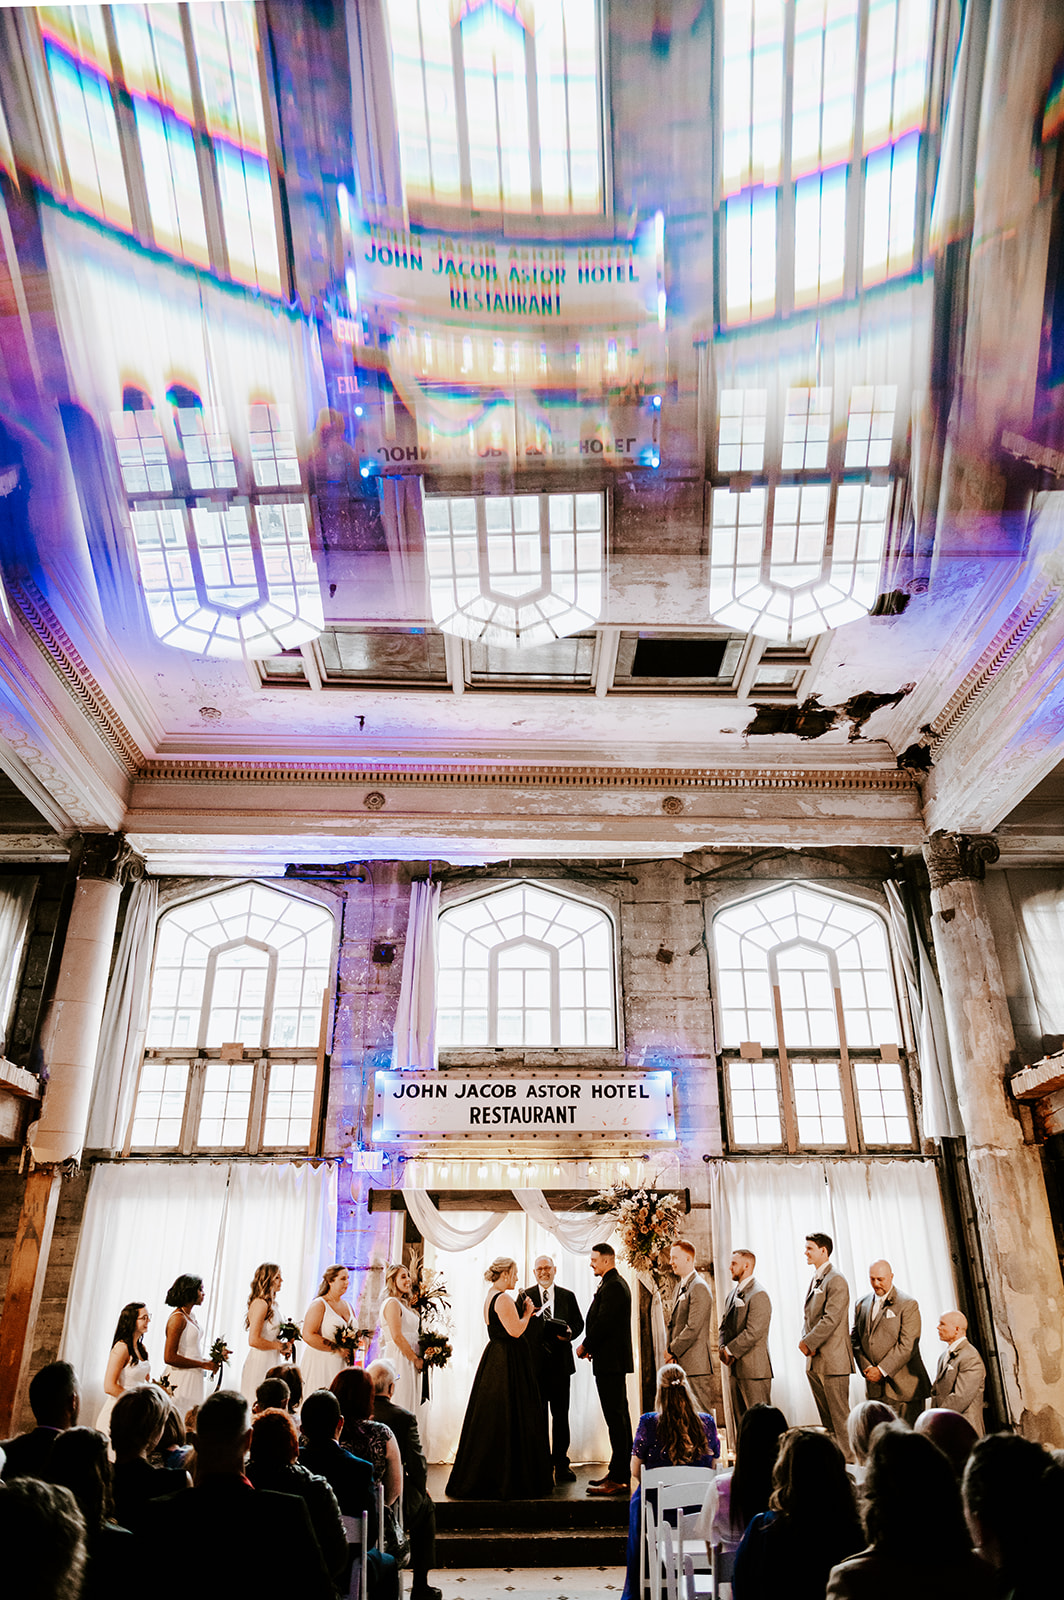 Indoor wedding reception photos taken with a prism